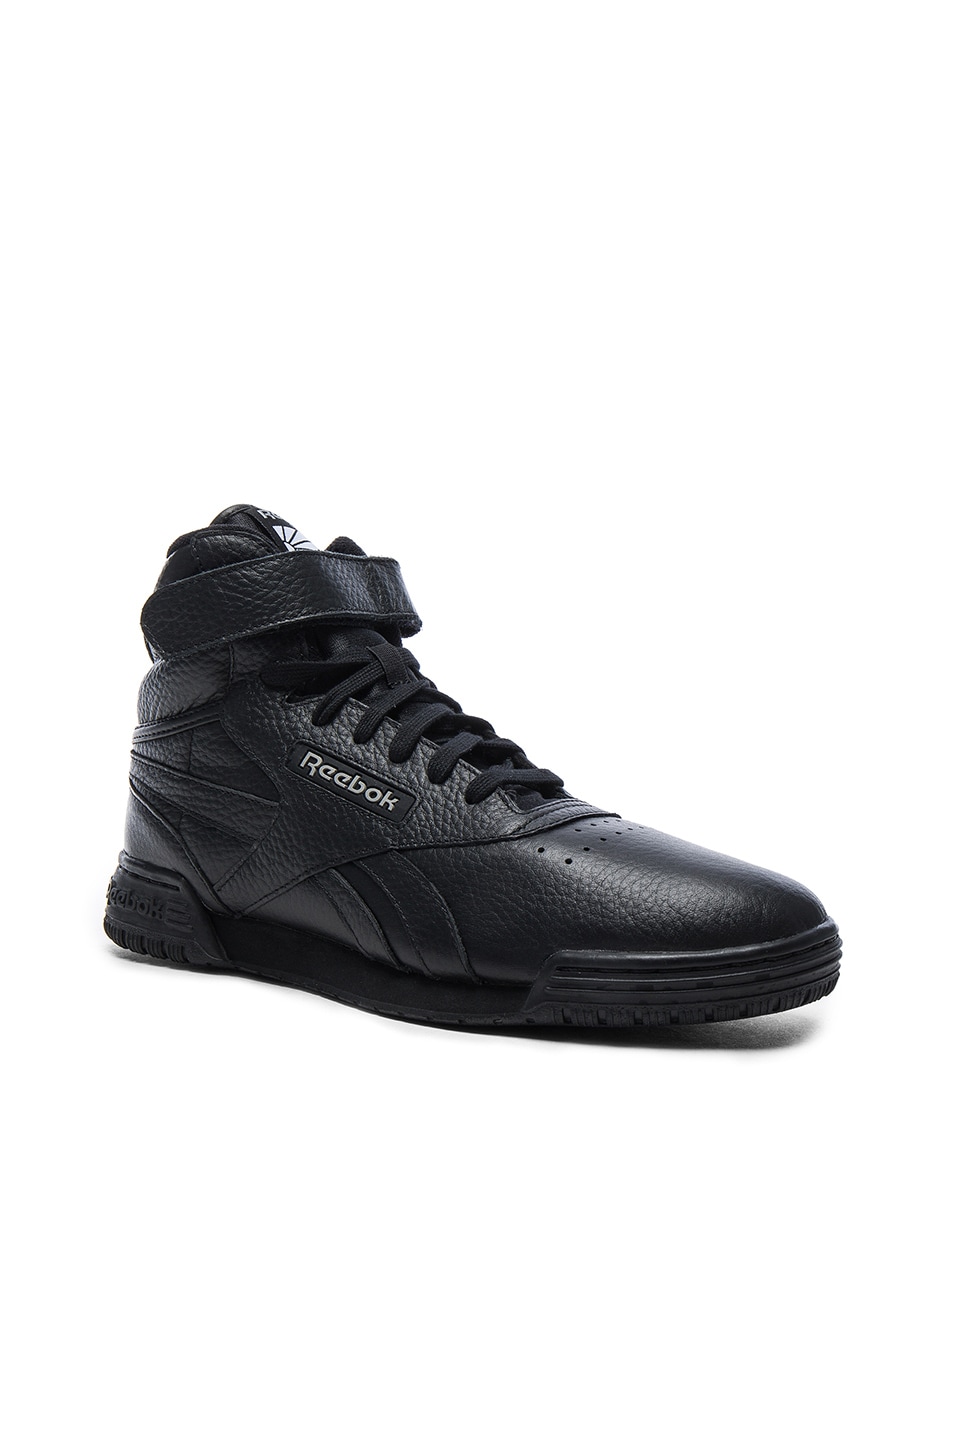 Image 1 of Gosha Rubchinskiy x Reebok Leather Classic High Sneakers in Black